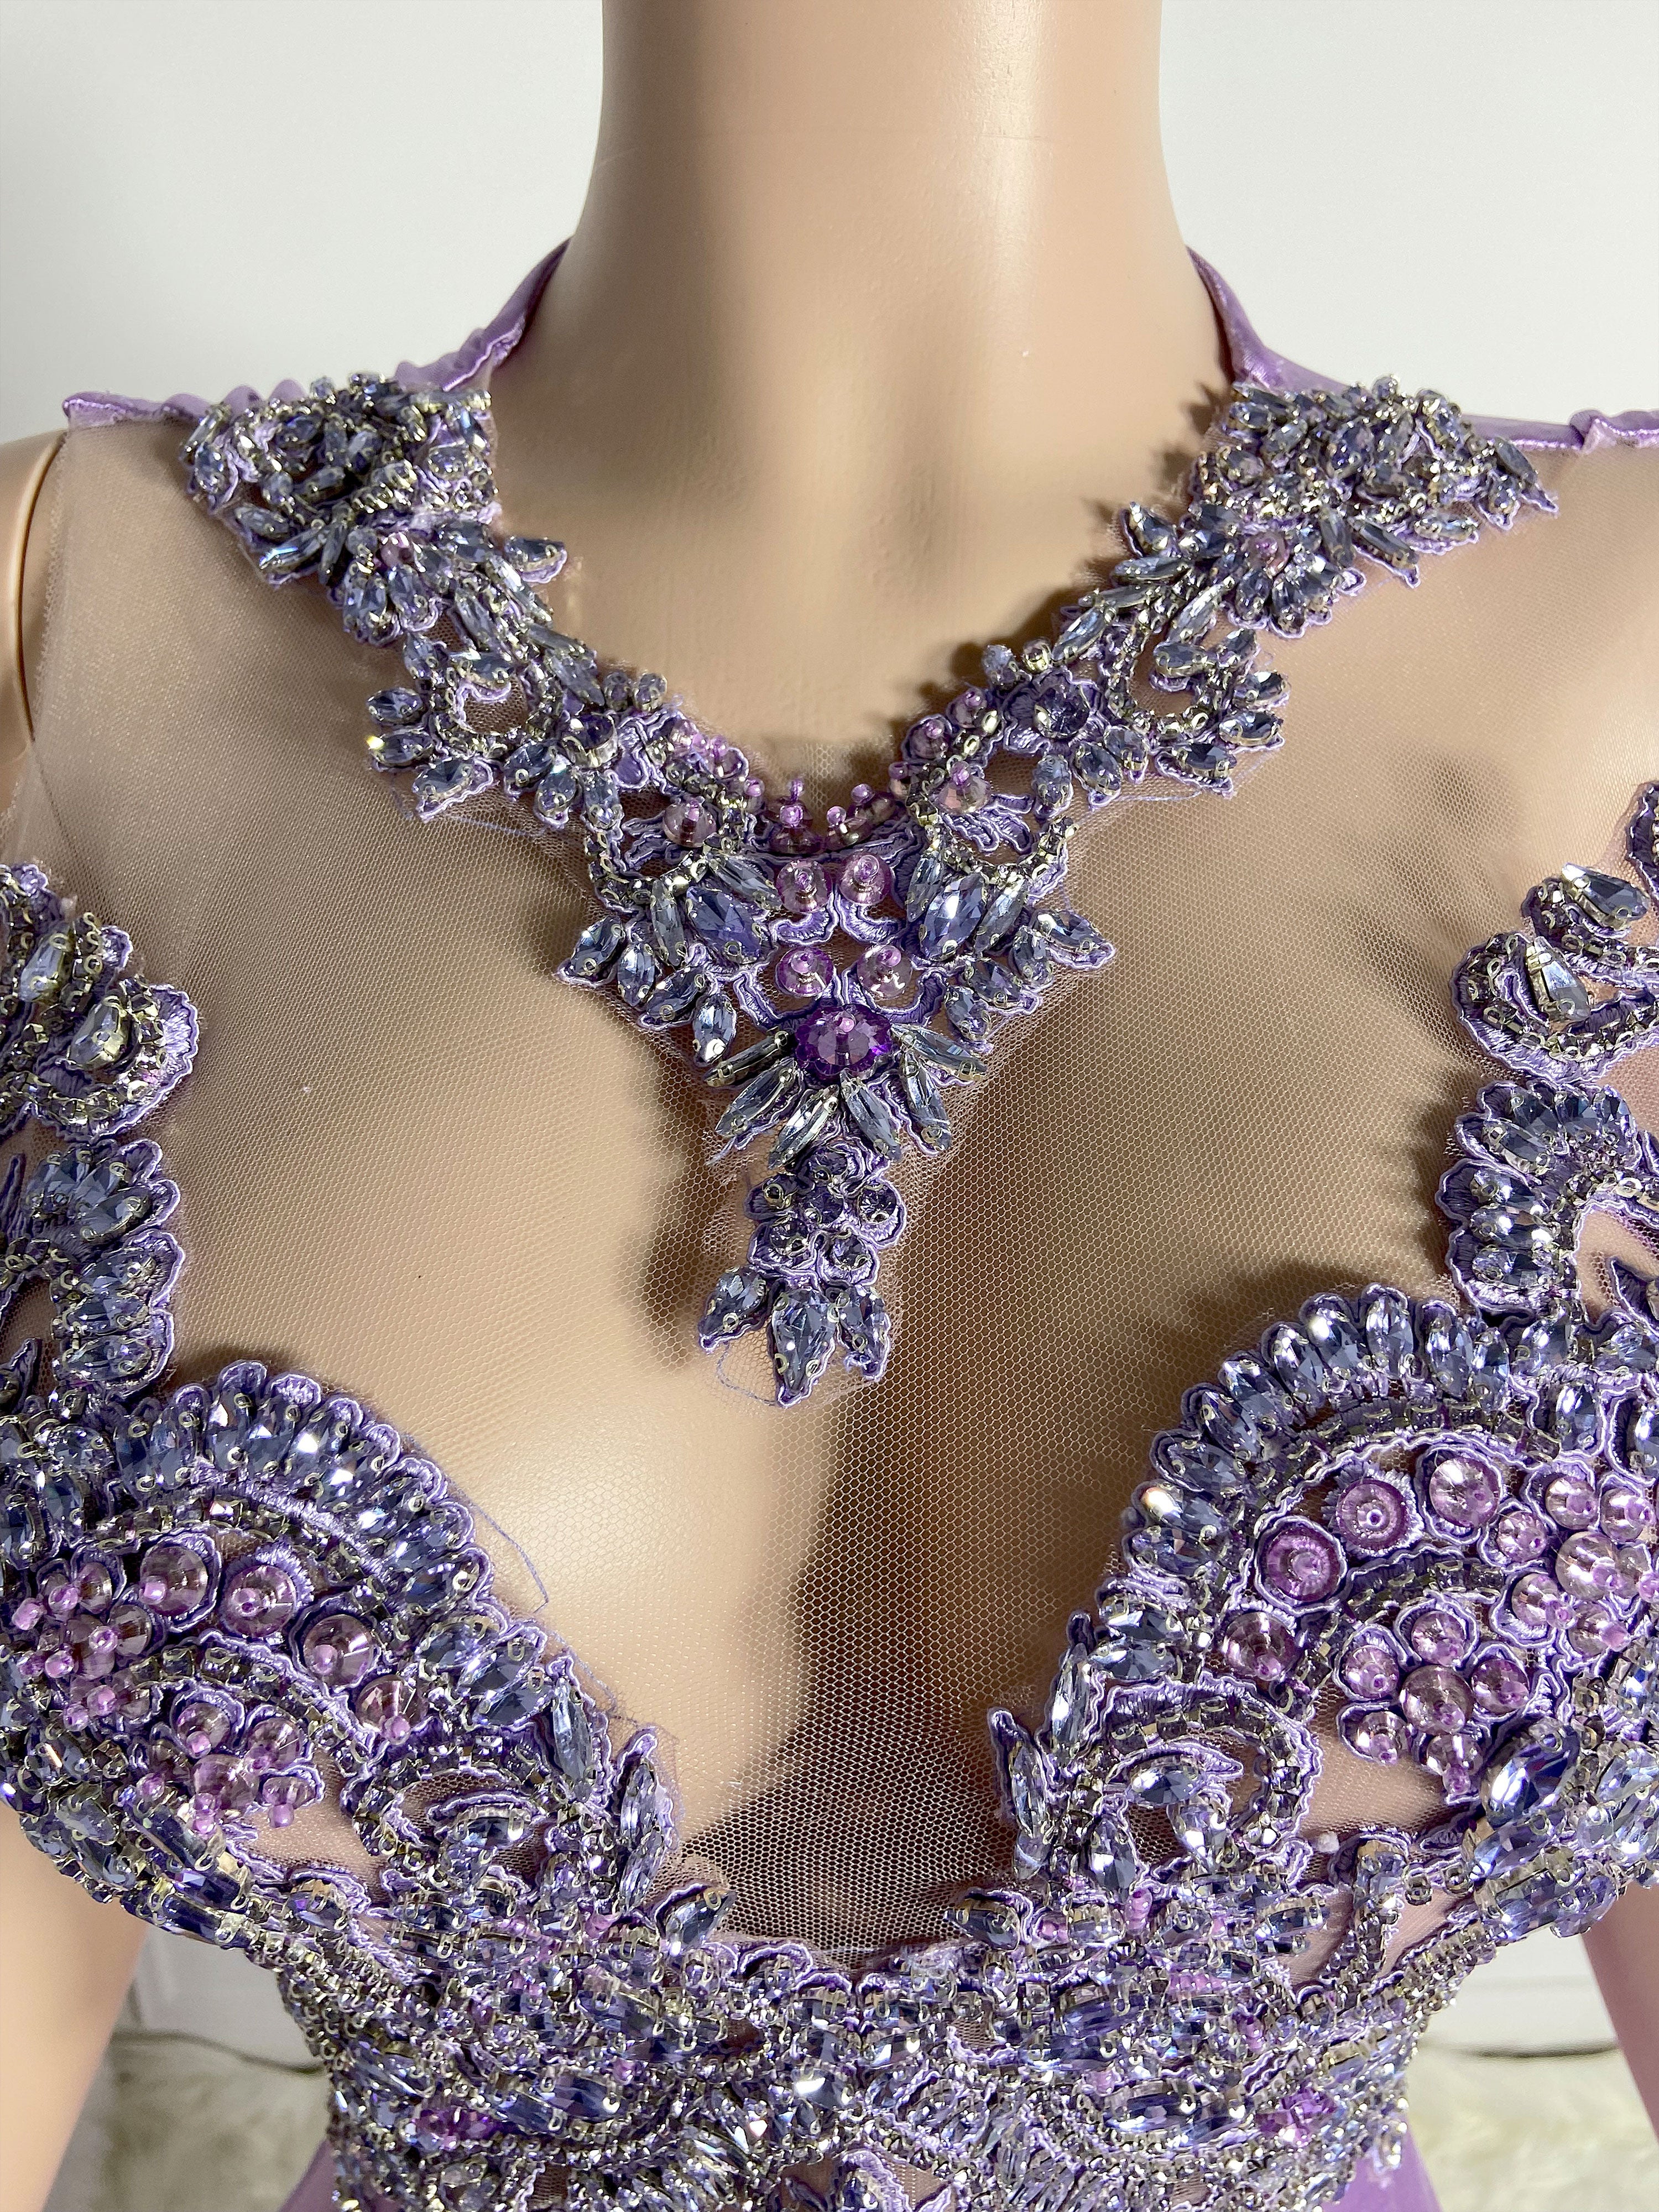 Lavender Dreams V-Neck Gown